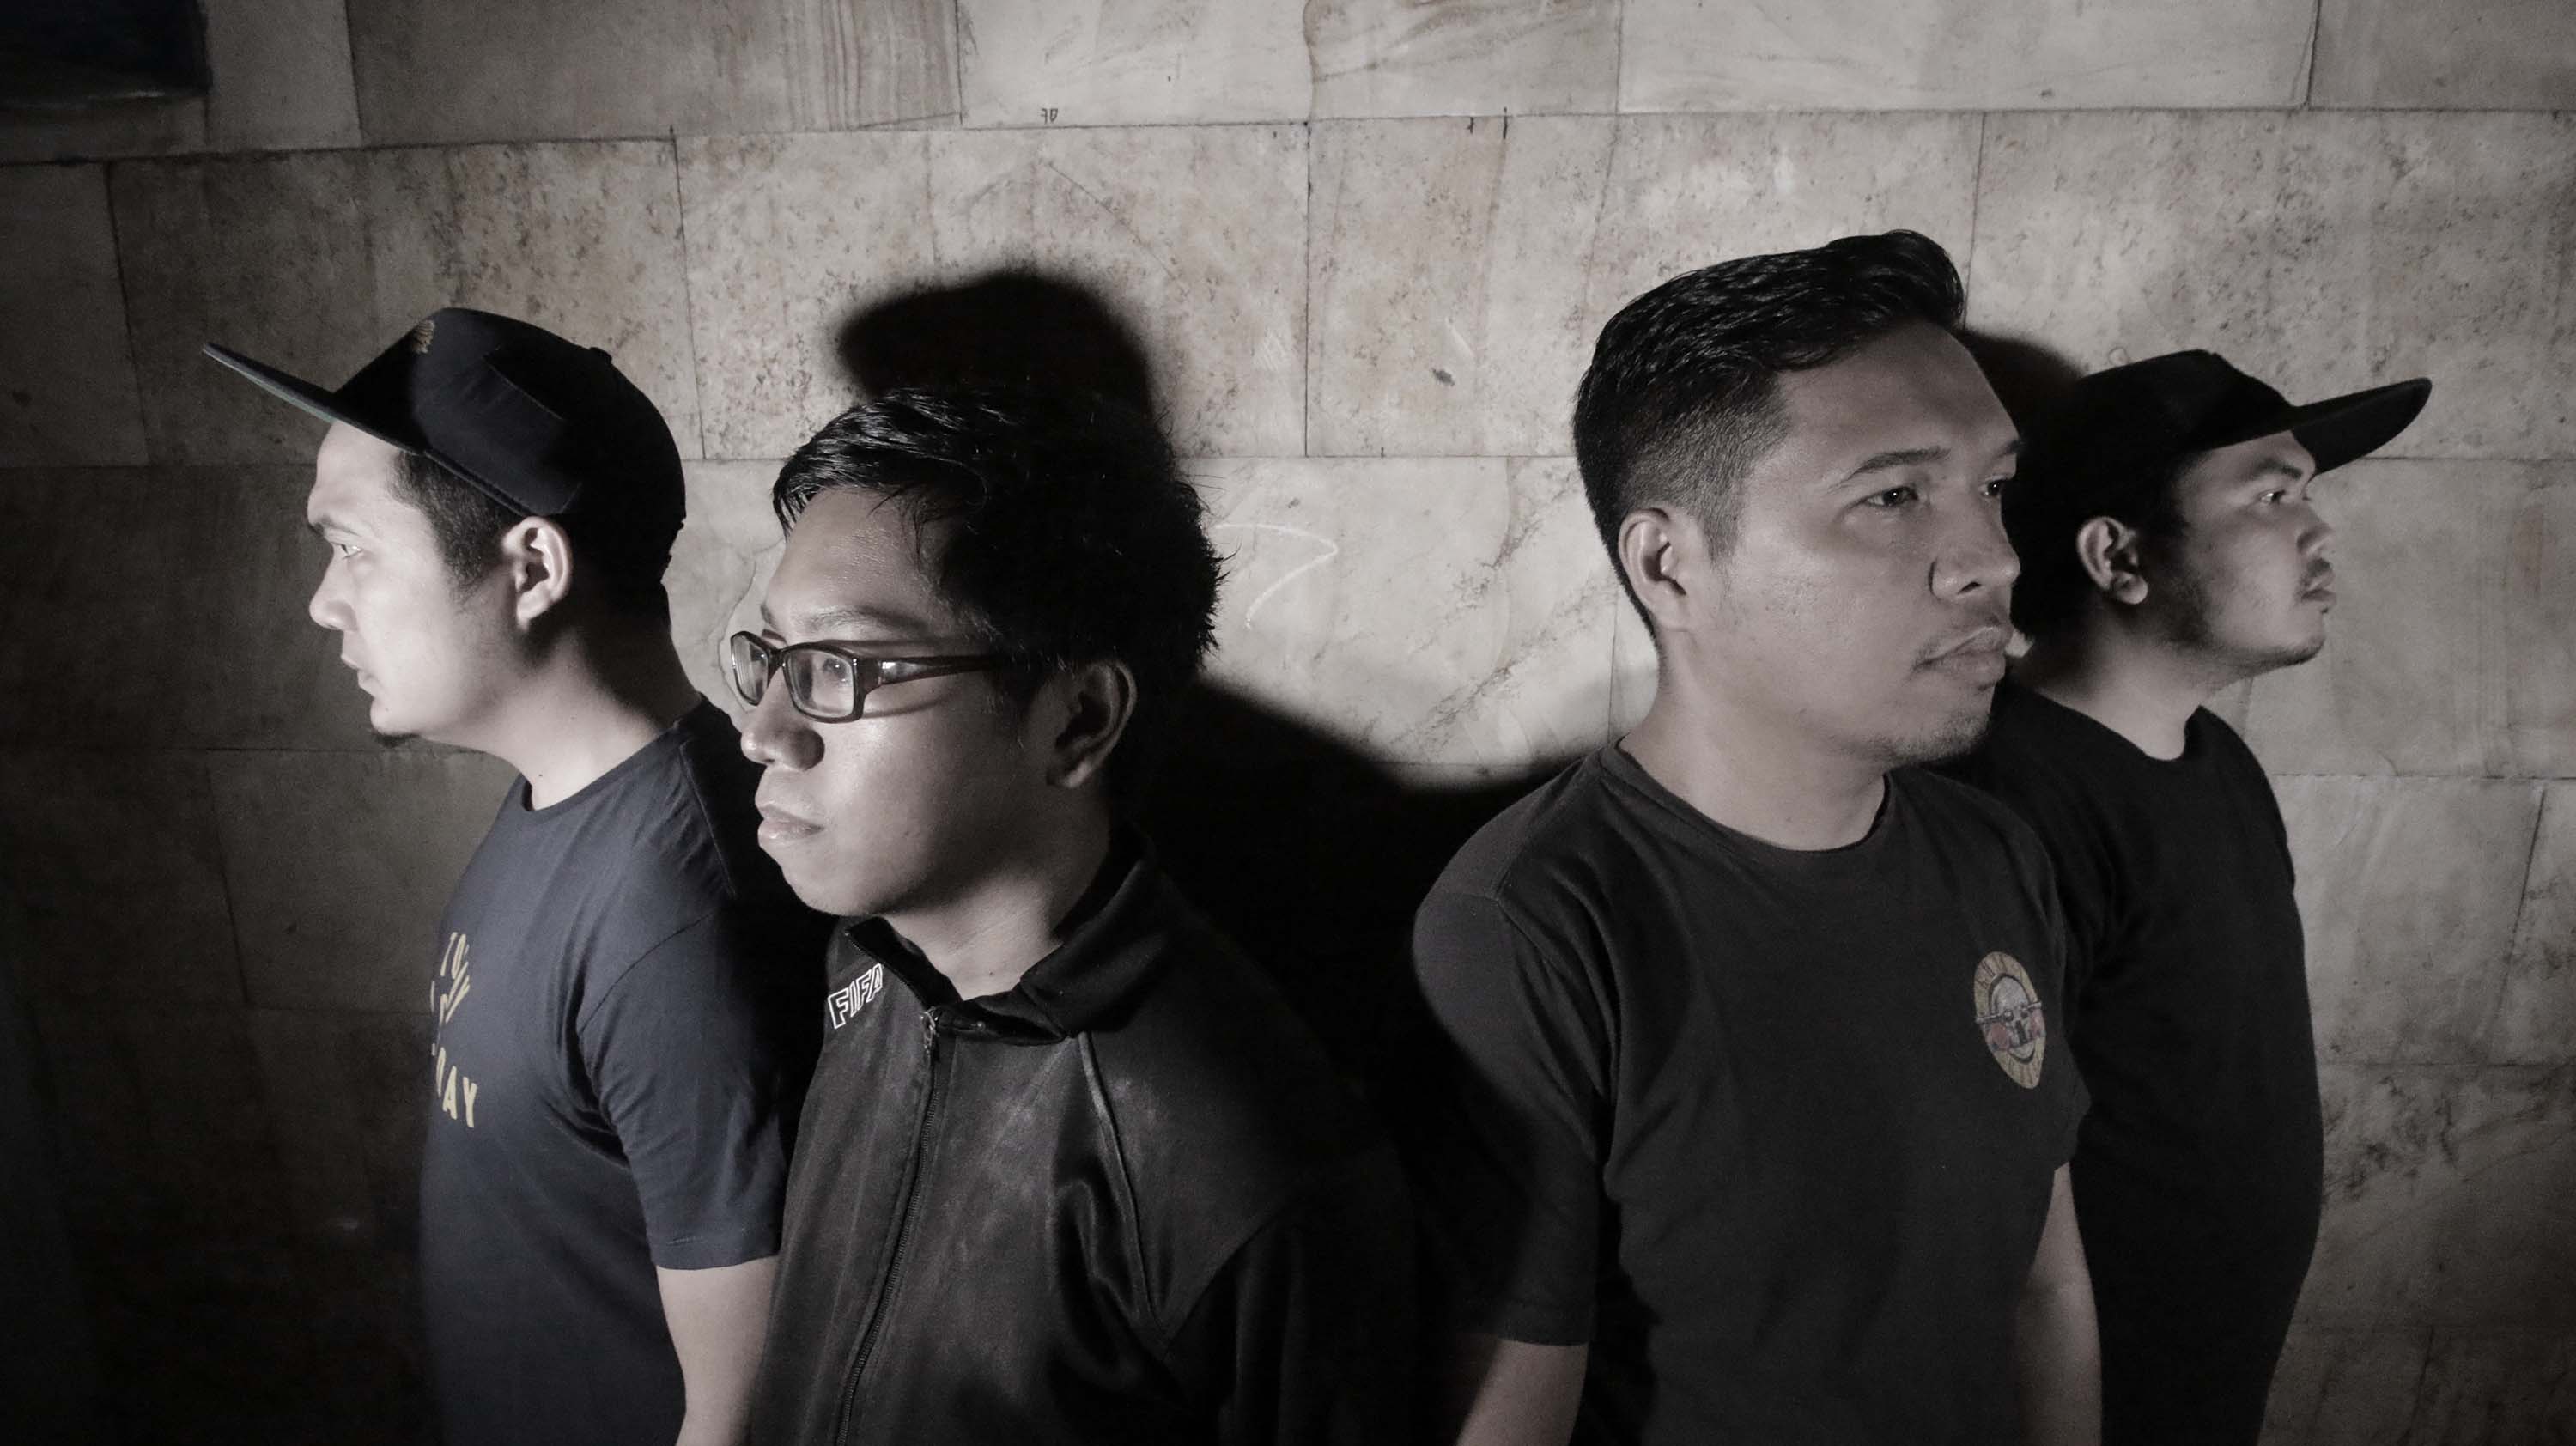 Message band. Hide группа. Индонезийский хардкор. Индонезийский хардкор under 18 рок. Индонезийский хардкор до 18.